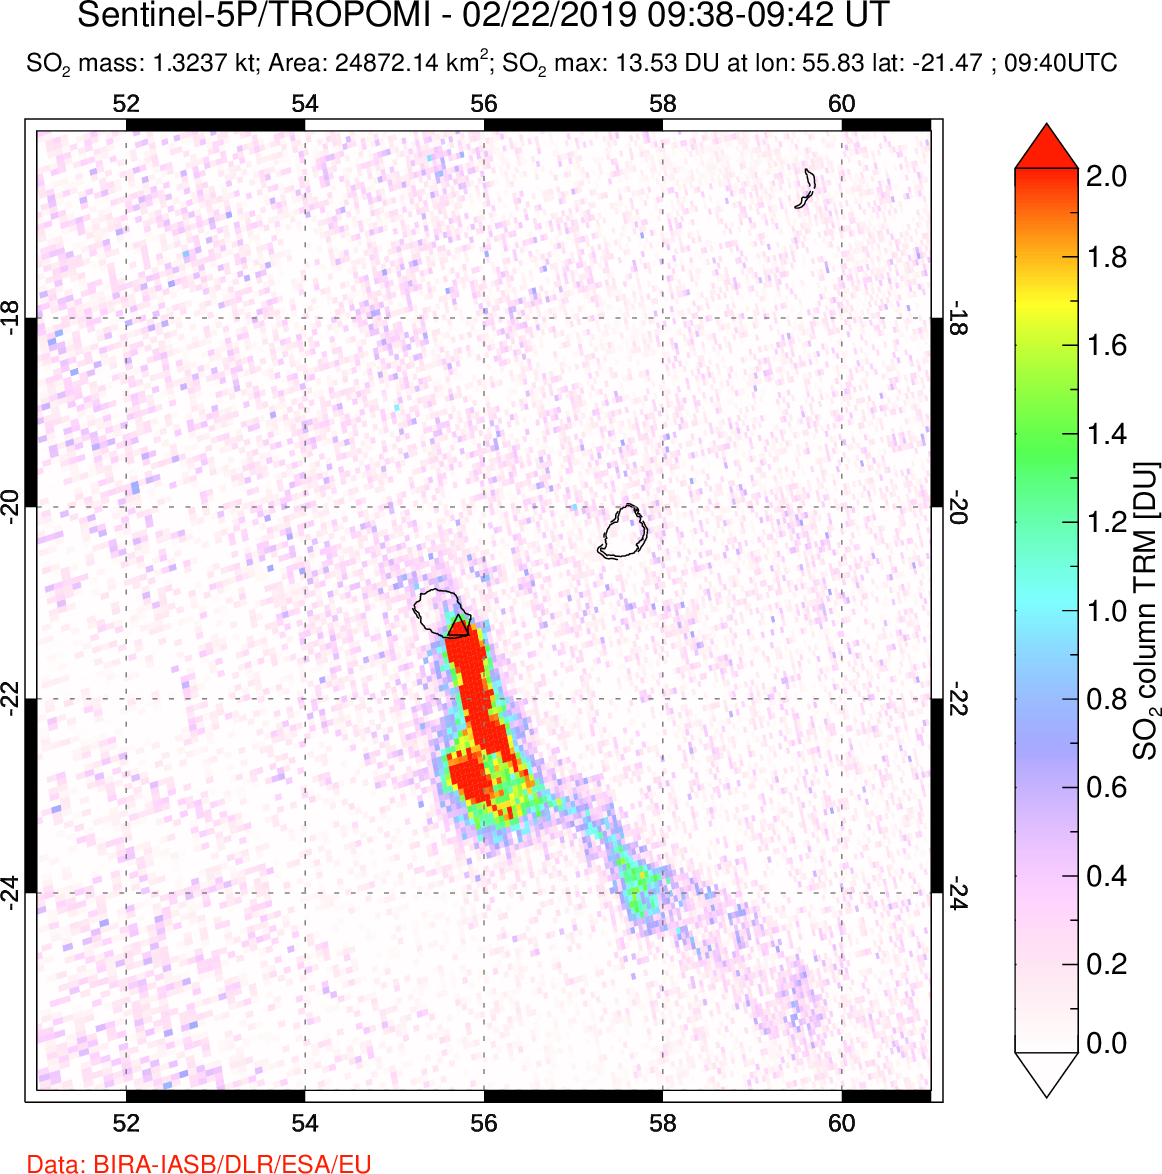 A sulfur dioxide image over Reunion Island, Indian Ocean on Feb 22, 2019.